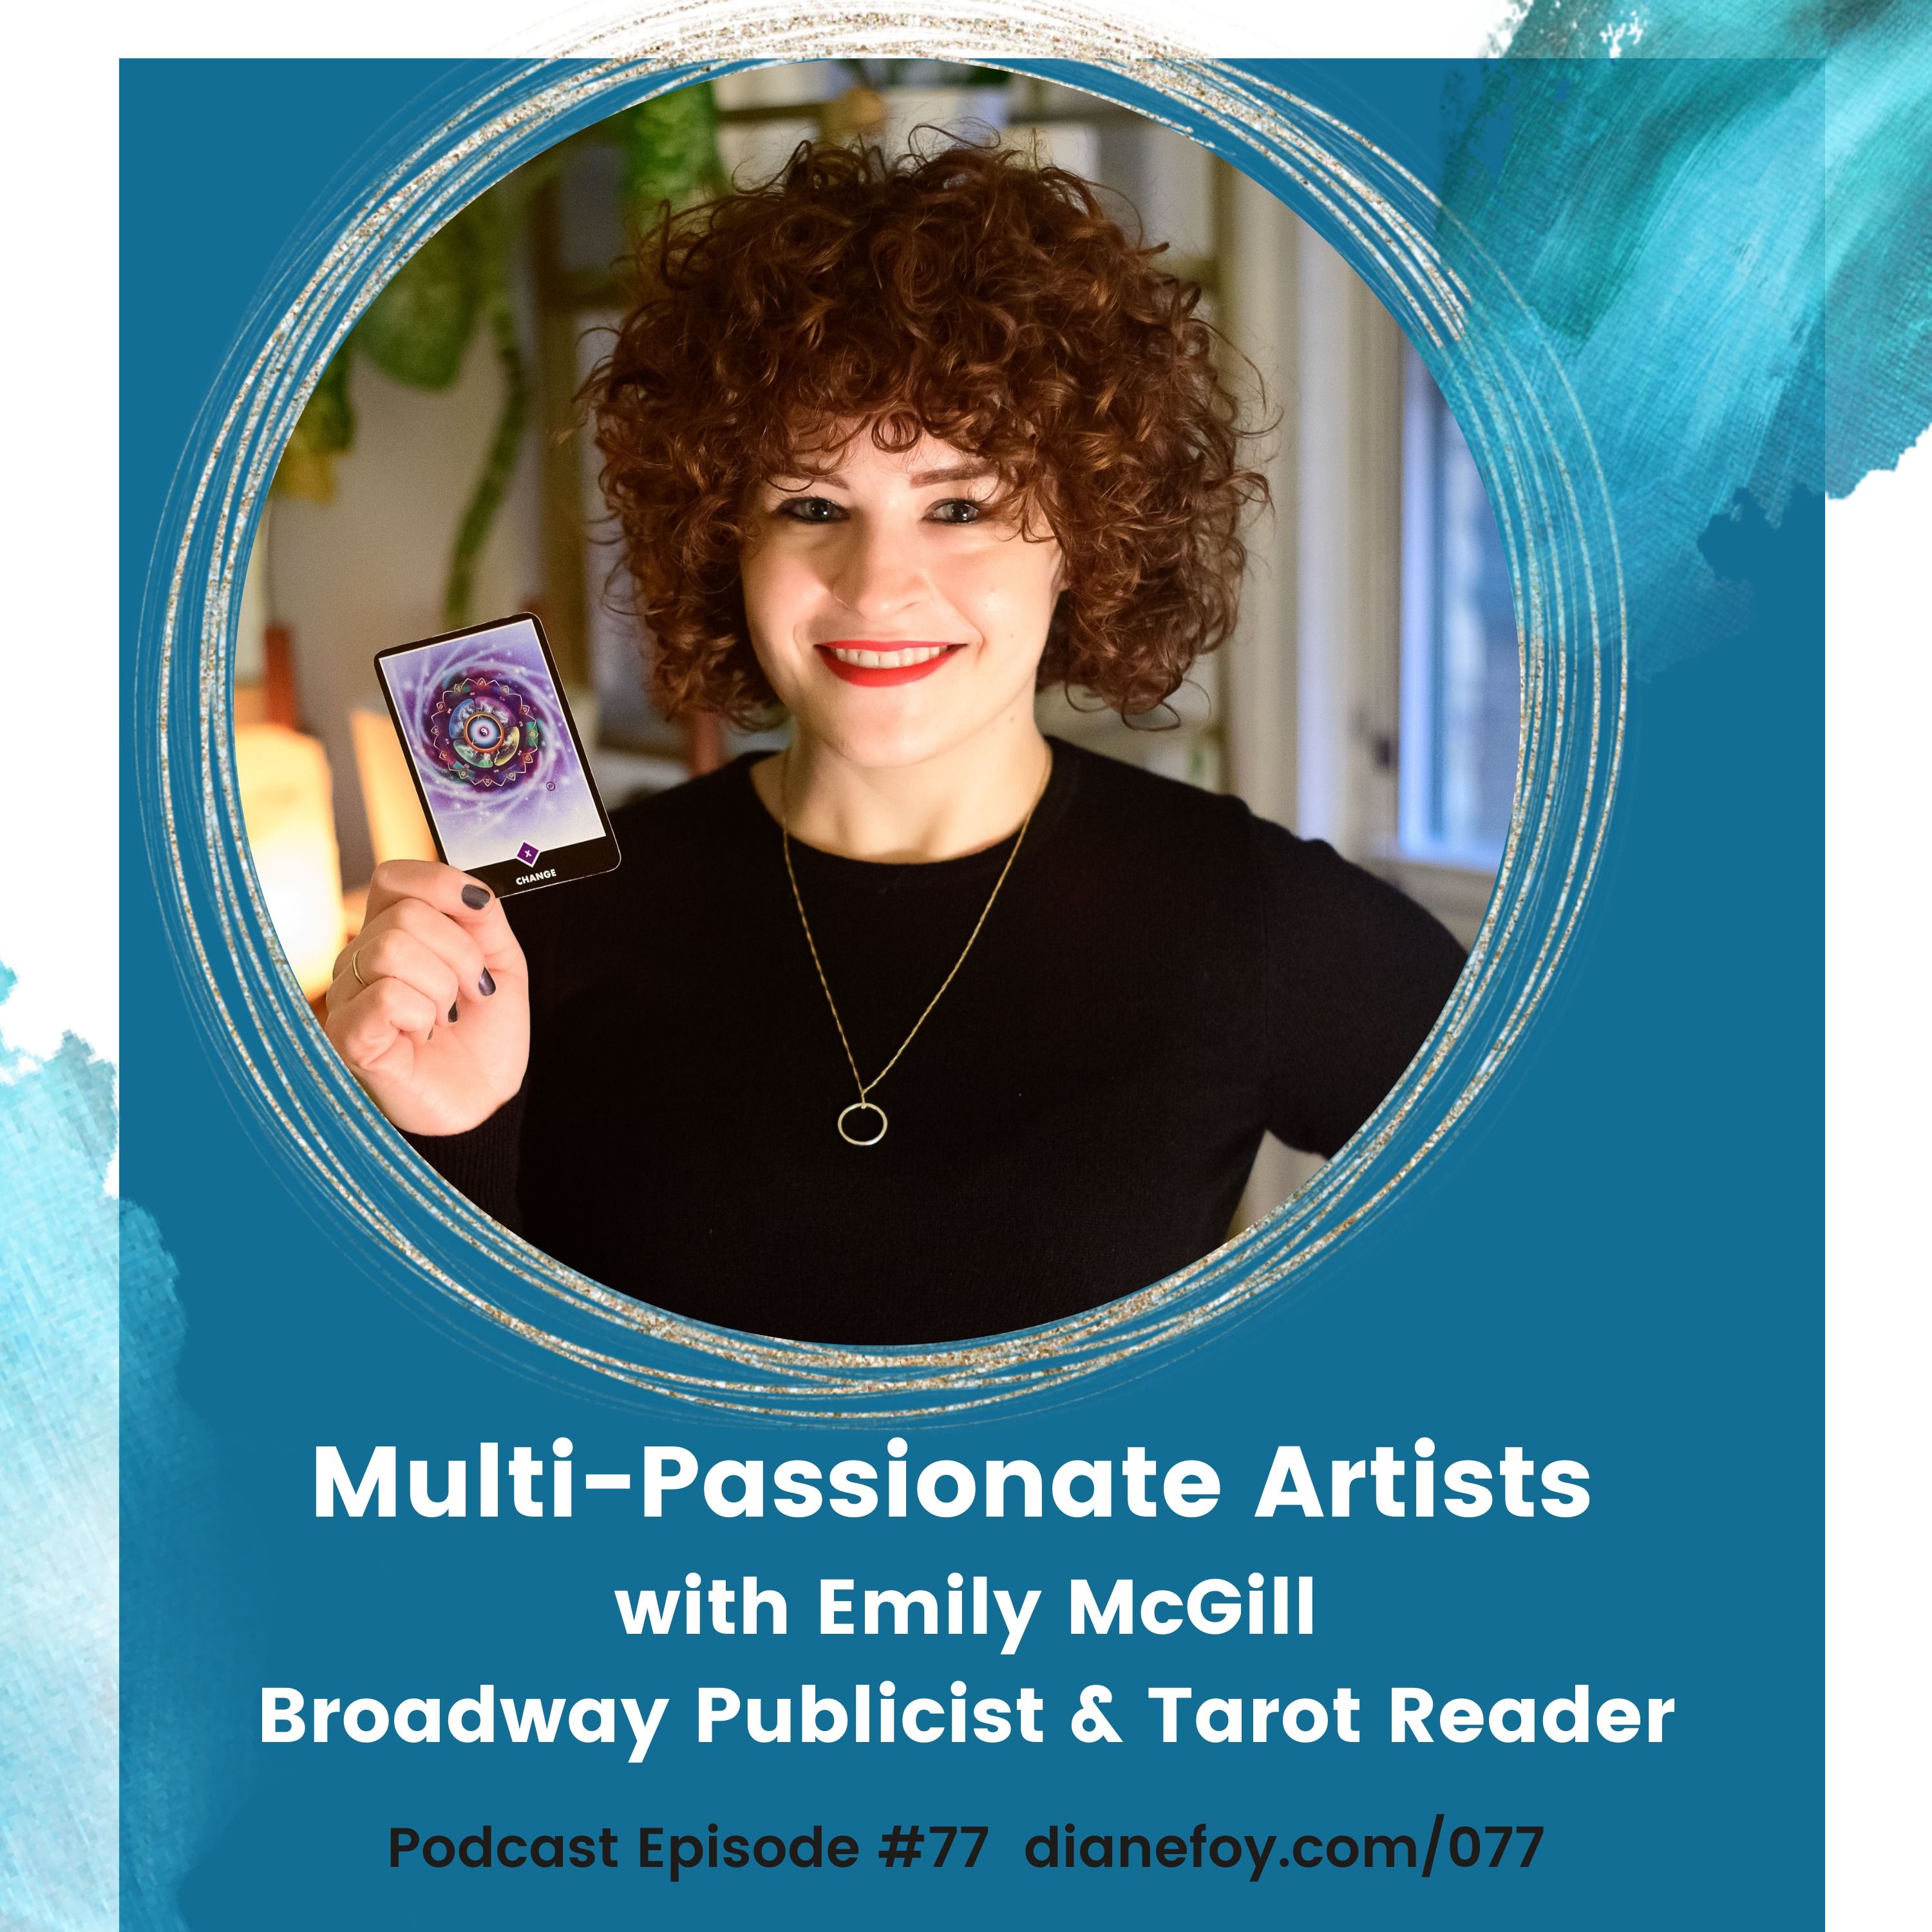 Broadway Publicist & Tarot Reader Emily McGill